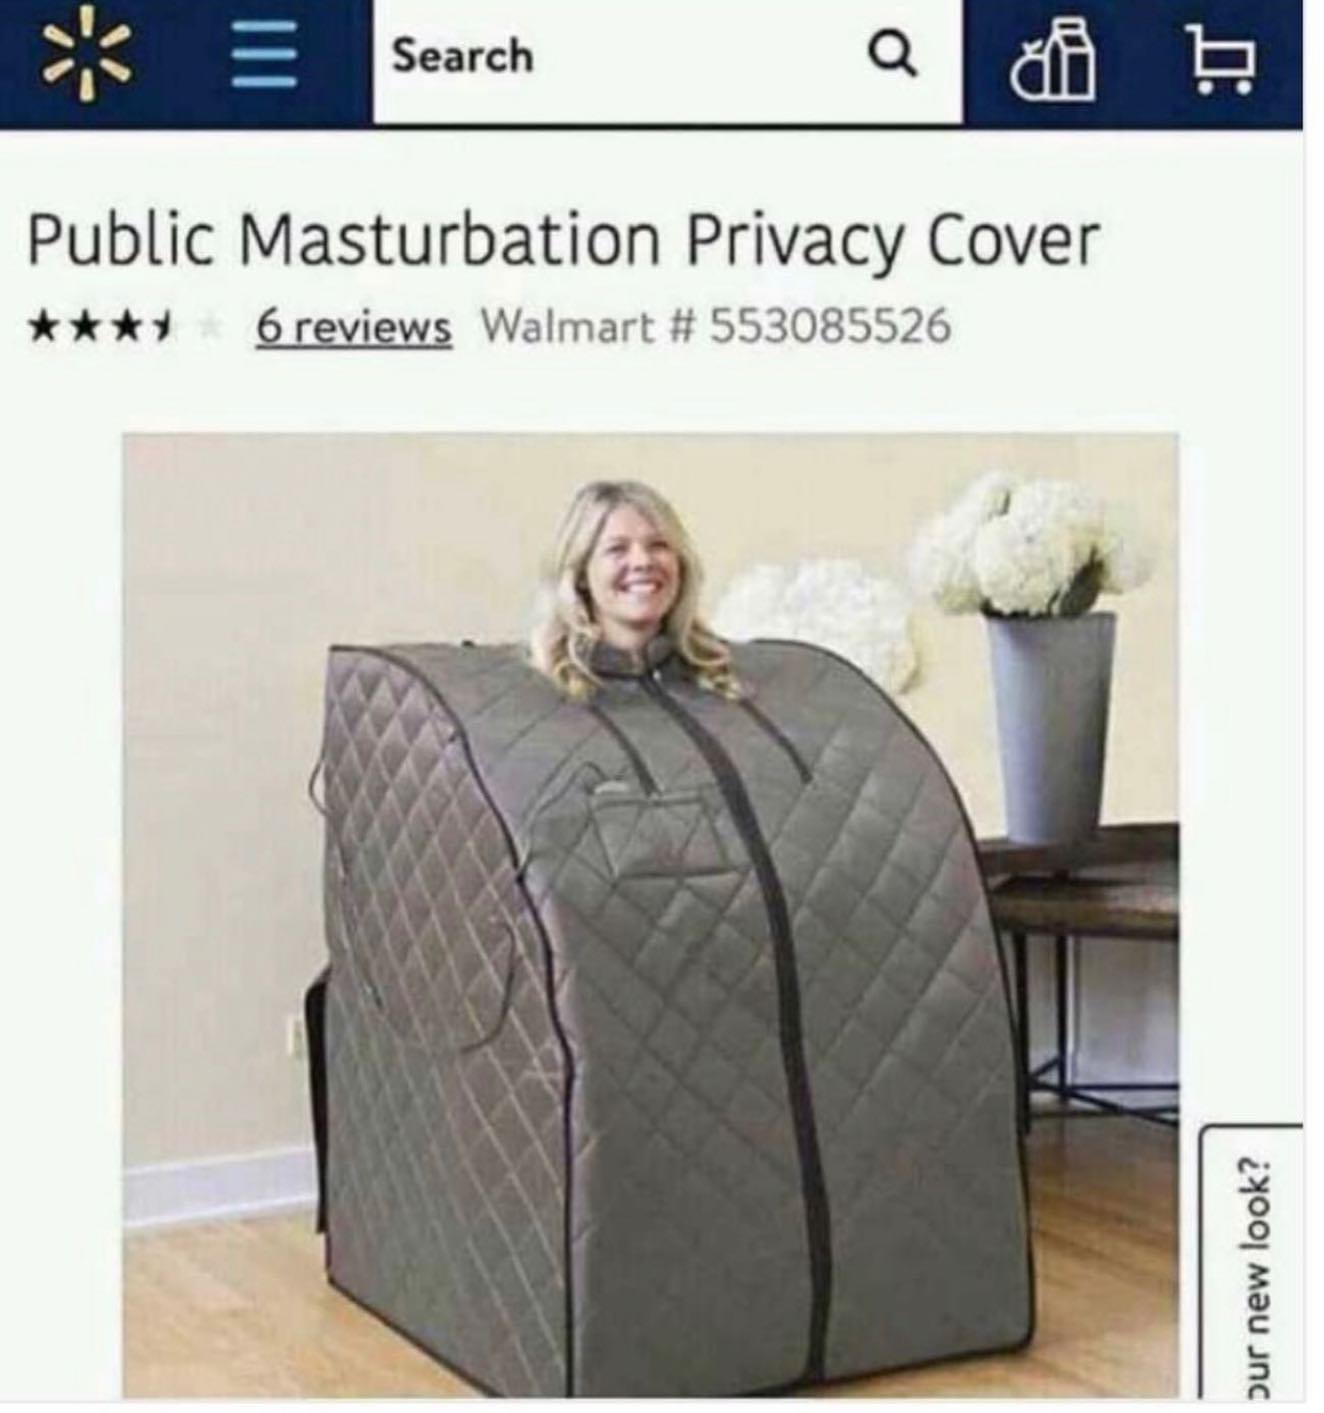 portable sauna - Search Q s Public Masturbation Privacy Cover 6 reviews Walmart # 553085526 pur new look?